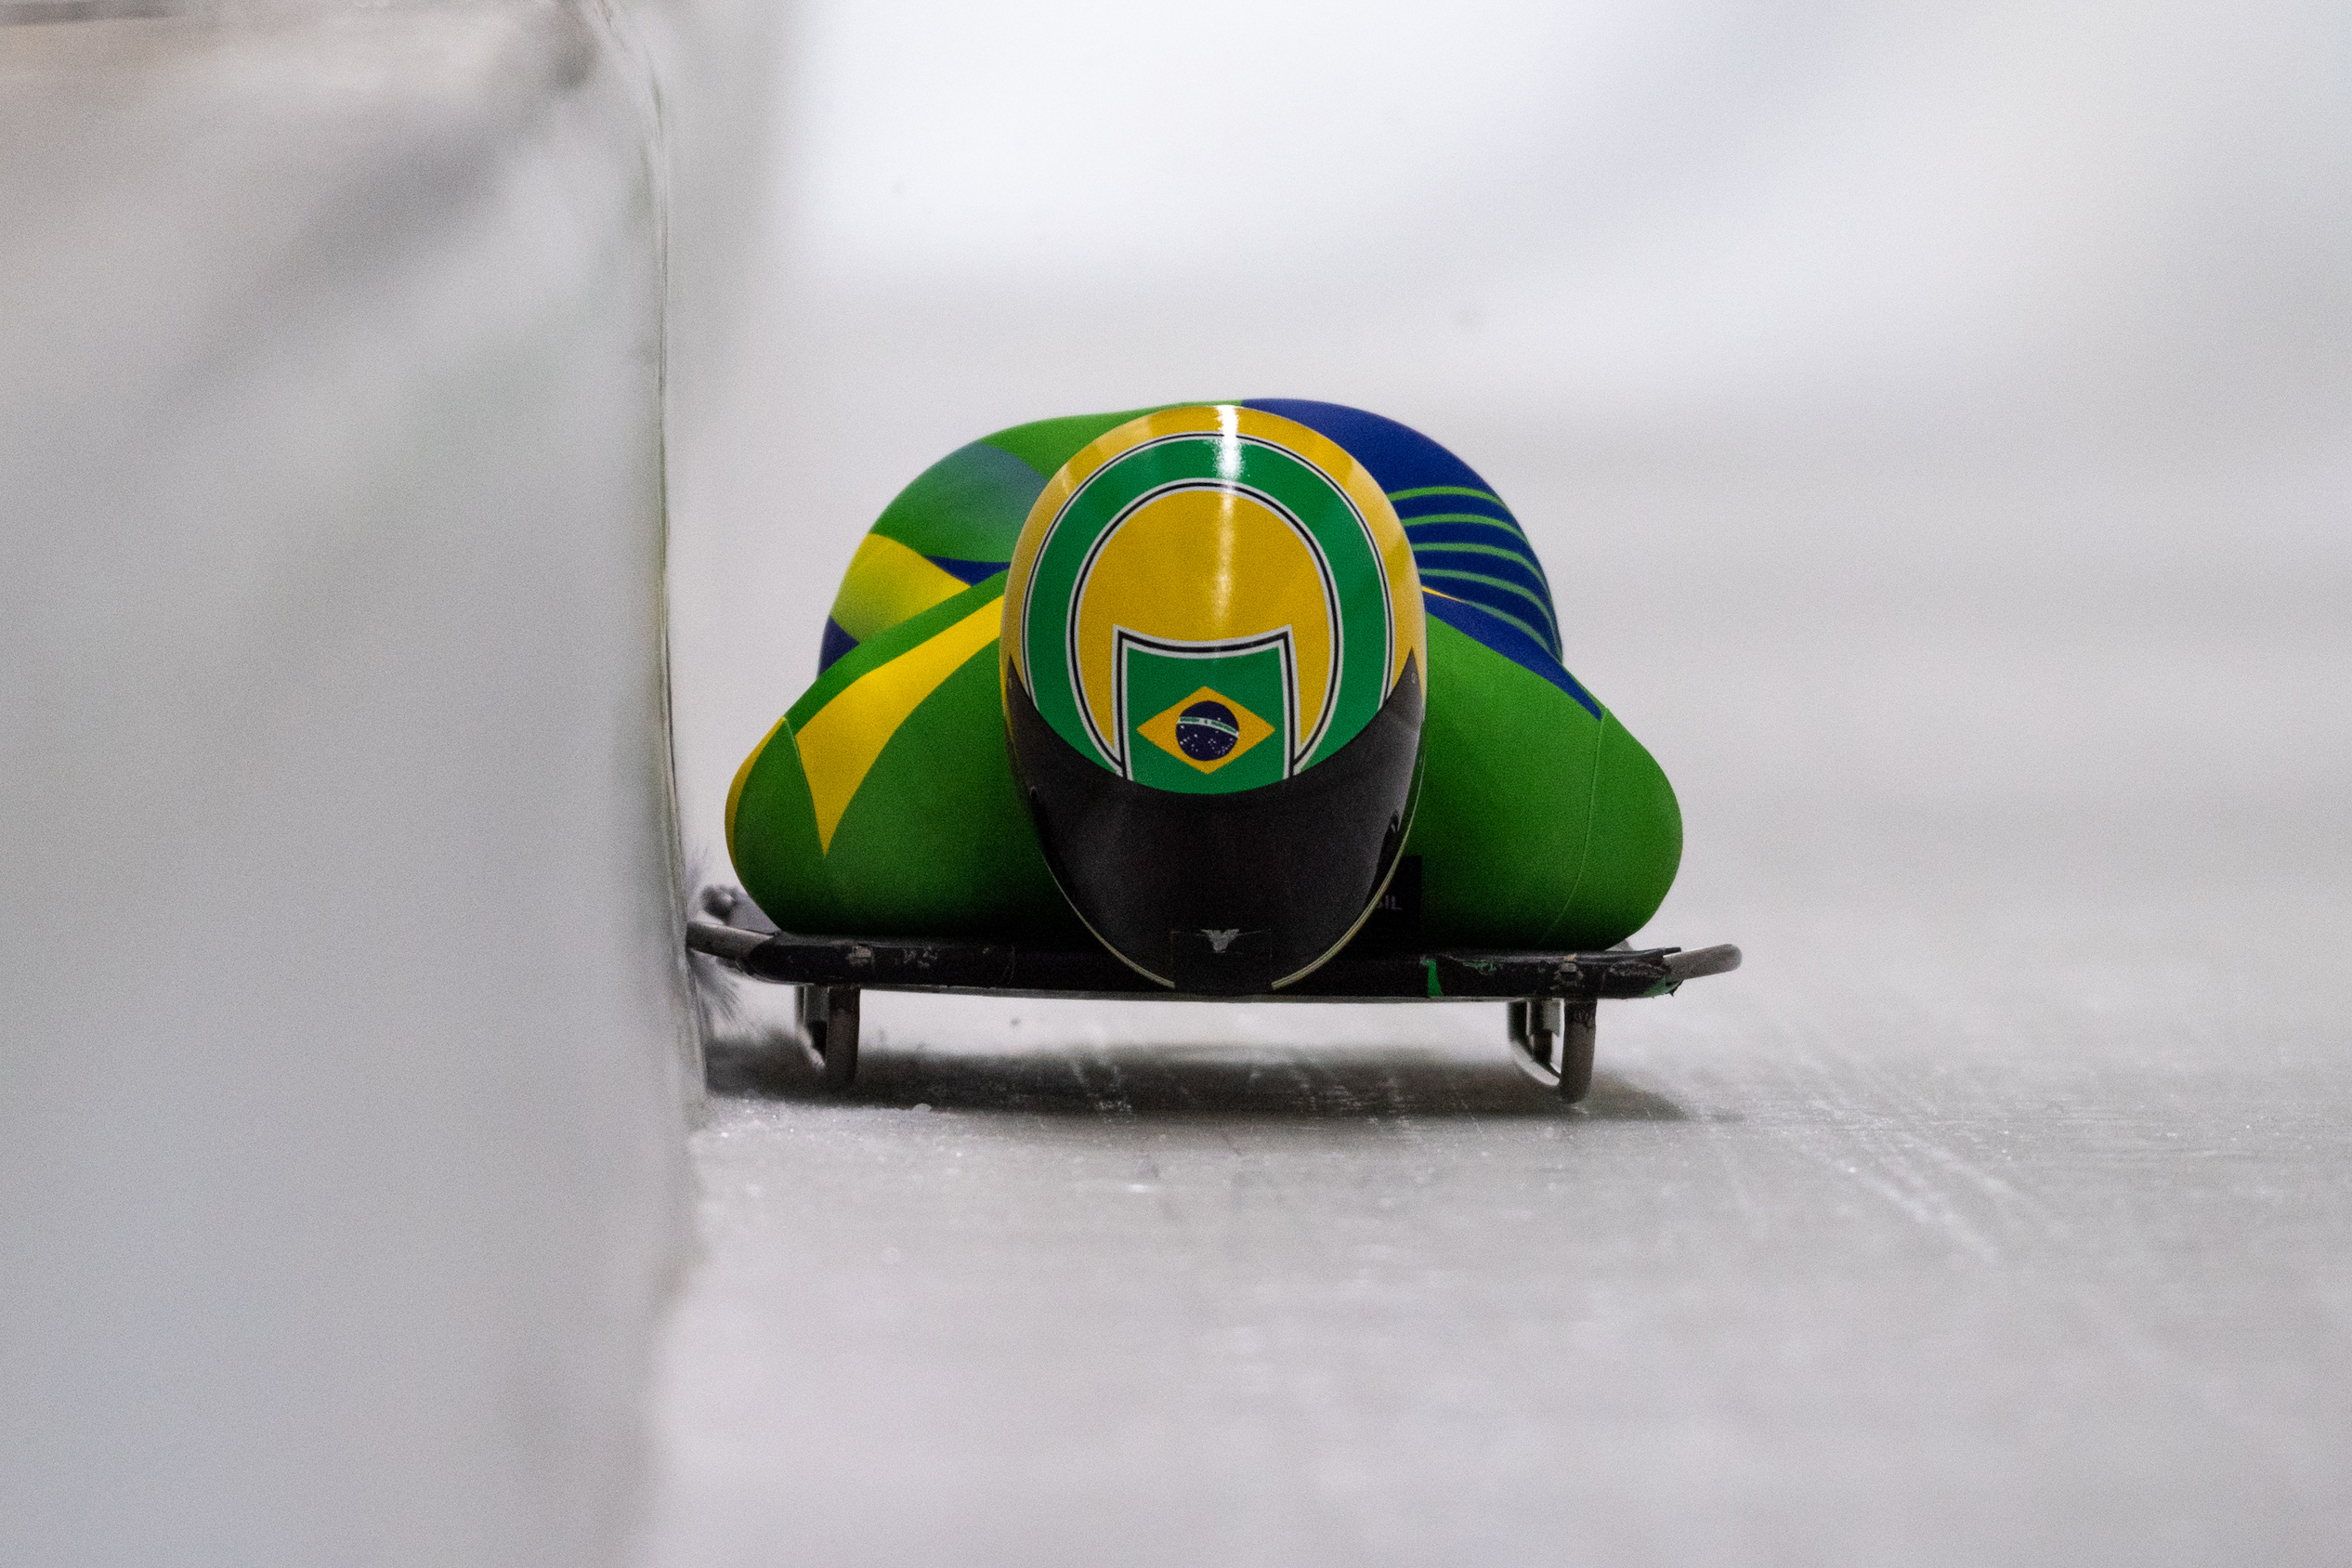 Nicole Silveira, com roupa verde e amarela e capacete amarelo, desce pista de gelo para Copa do Mundo de Skeleton